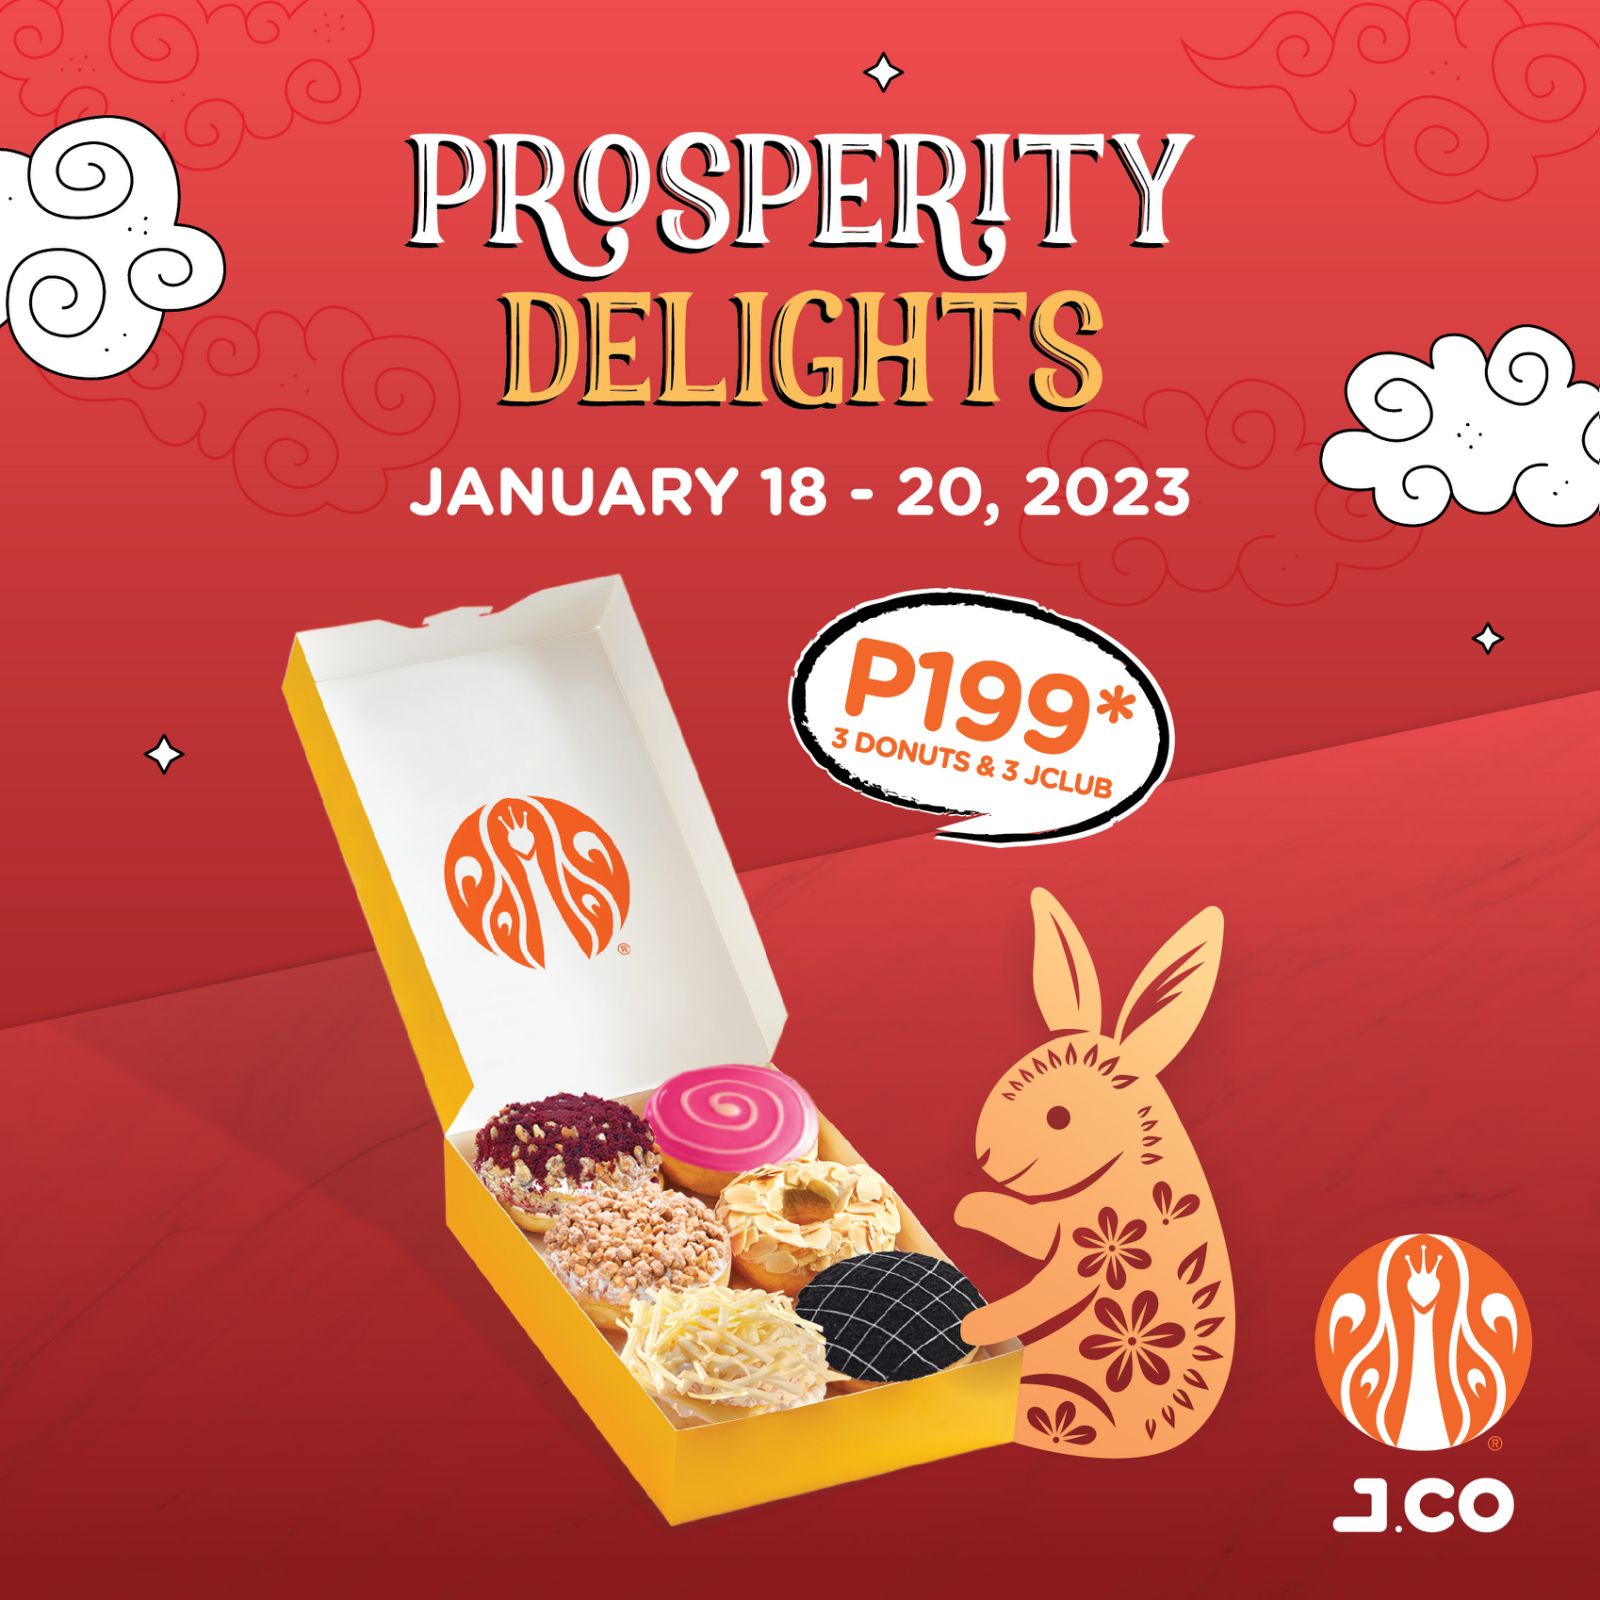 J.CO Donuts' Prosperity Delights 2023